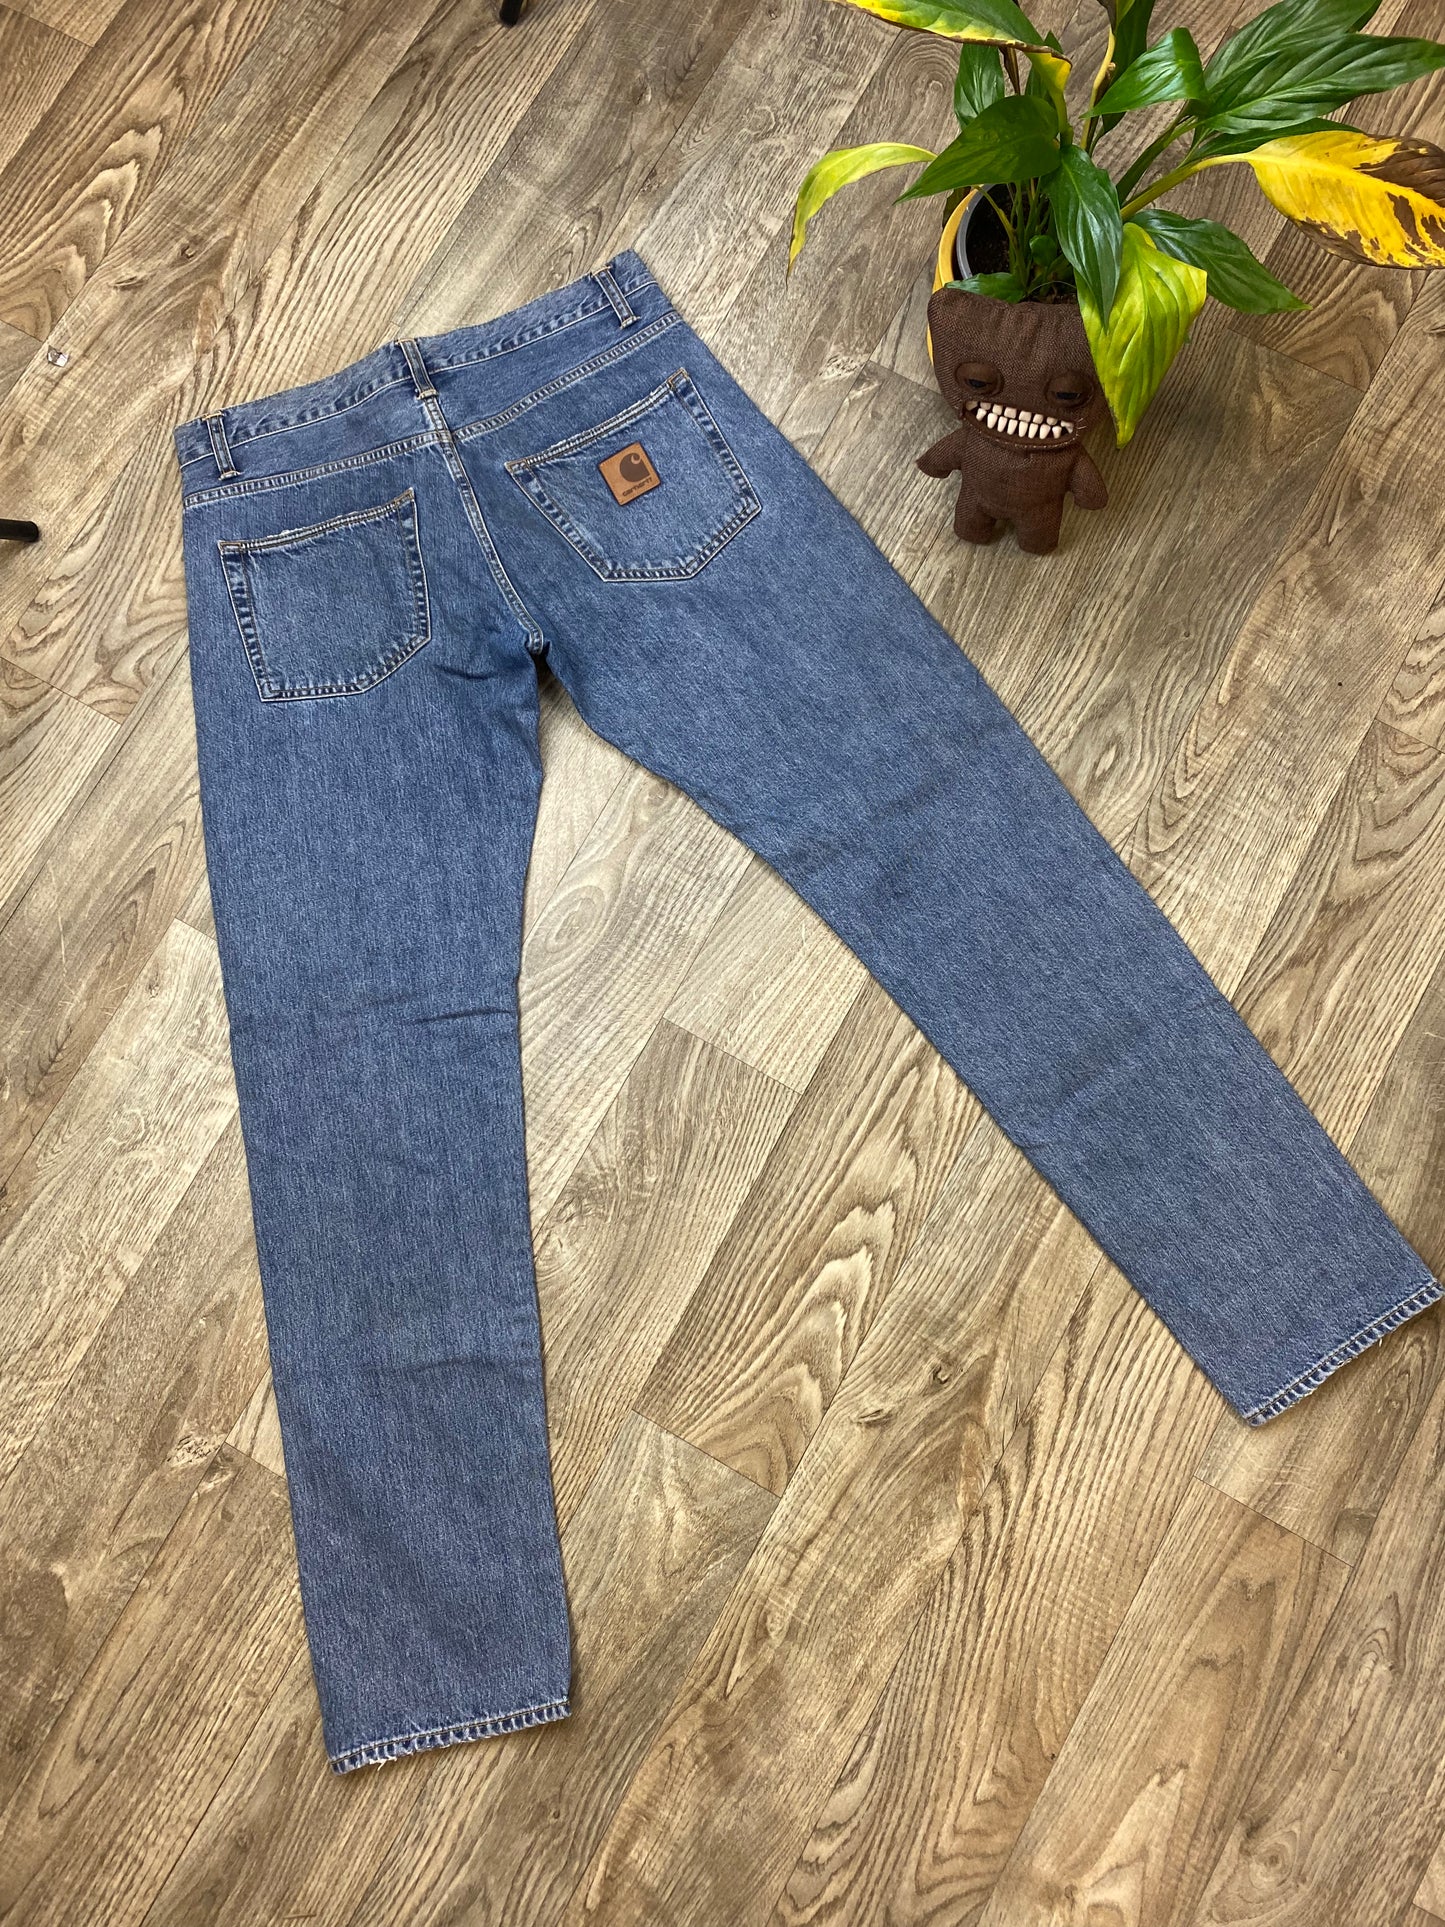 Vintage Carhartt 32x32 Jeans Denim Pants